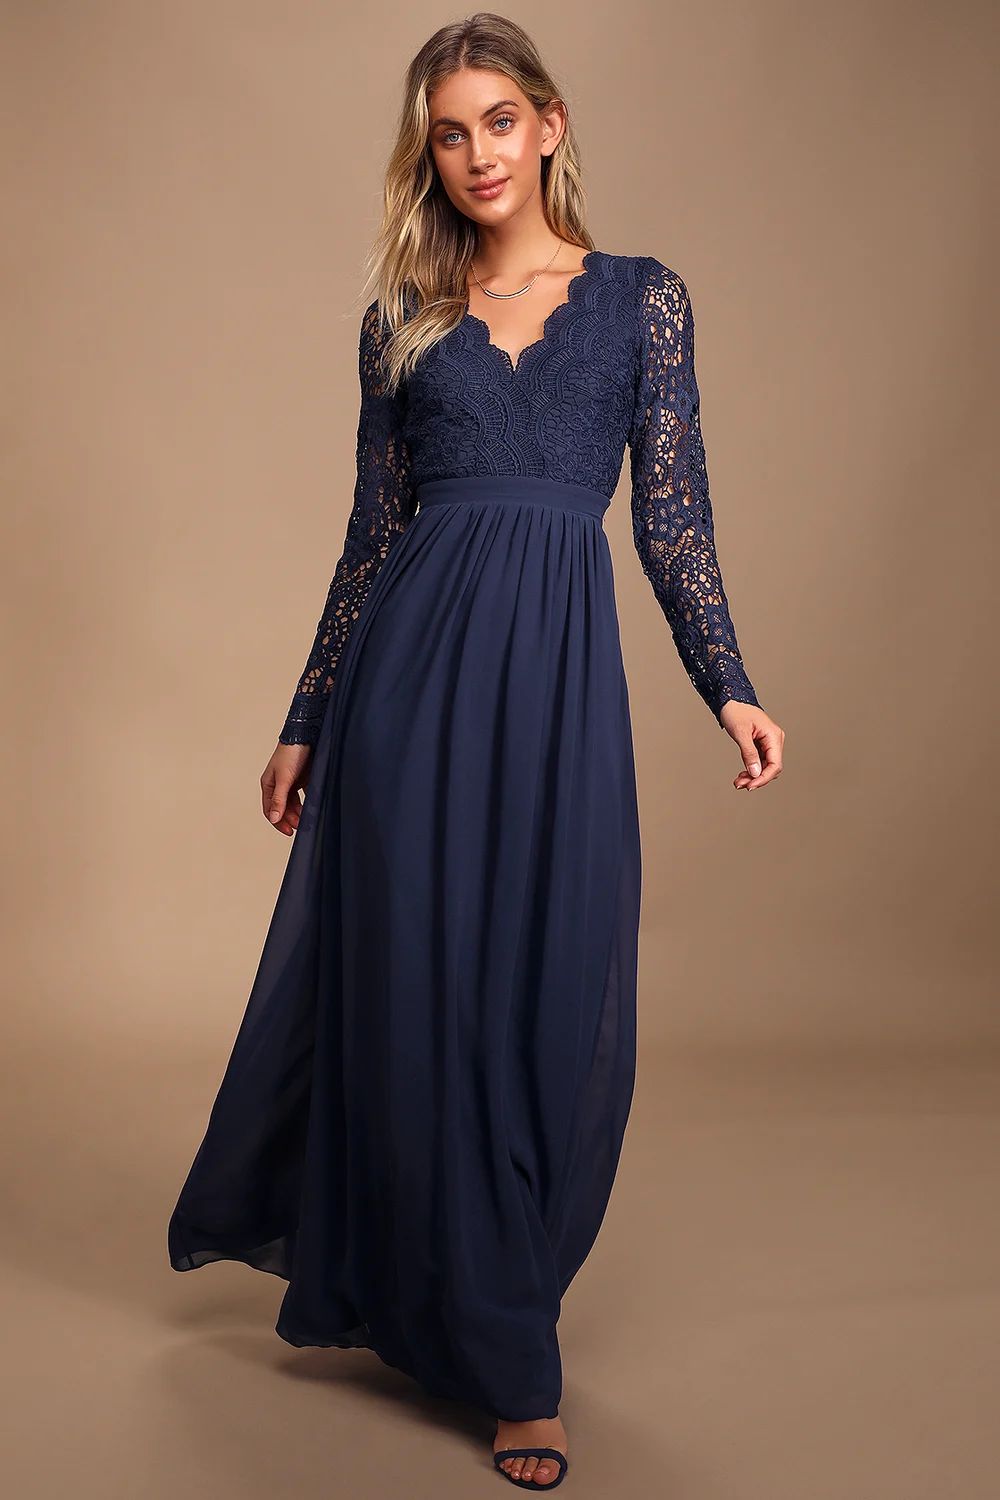 Awaken My Love Navy Blue Long Sleeve Lace Maxi Dress | Lulus (US)